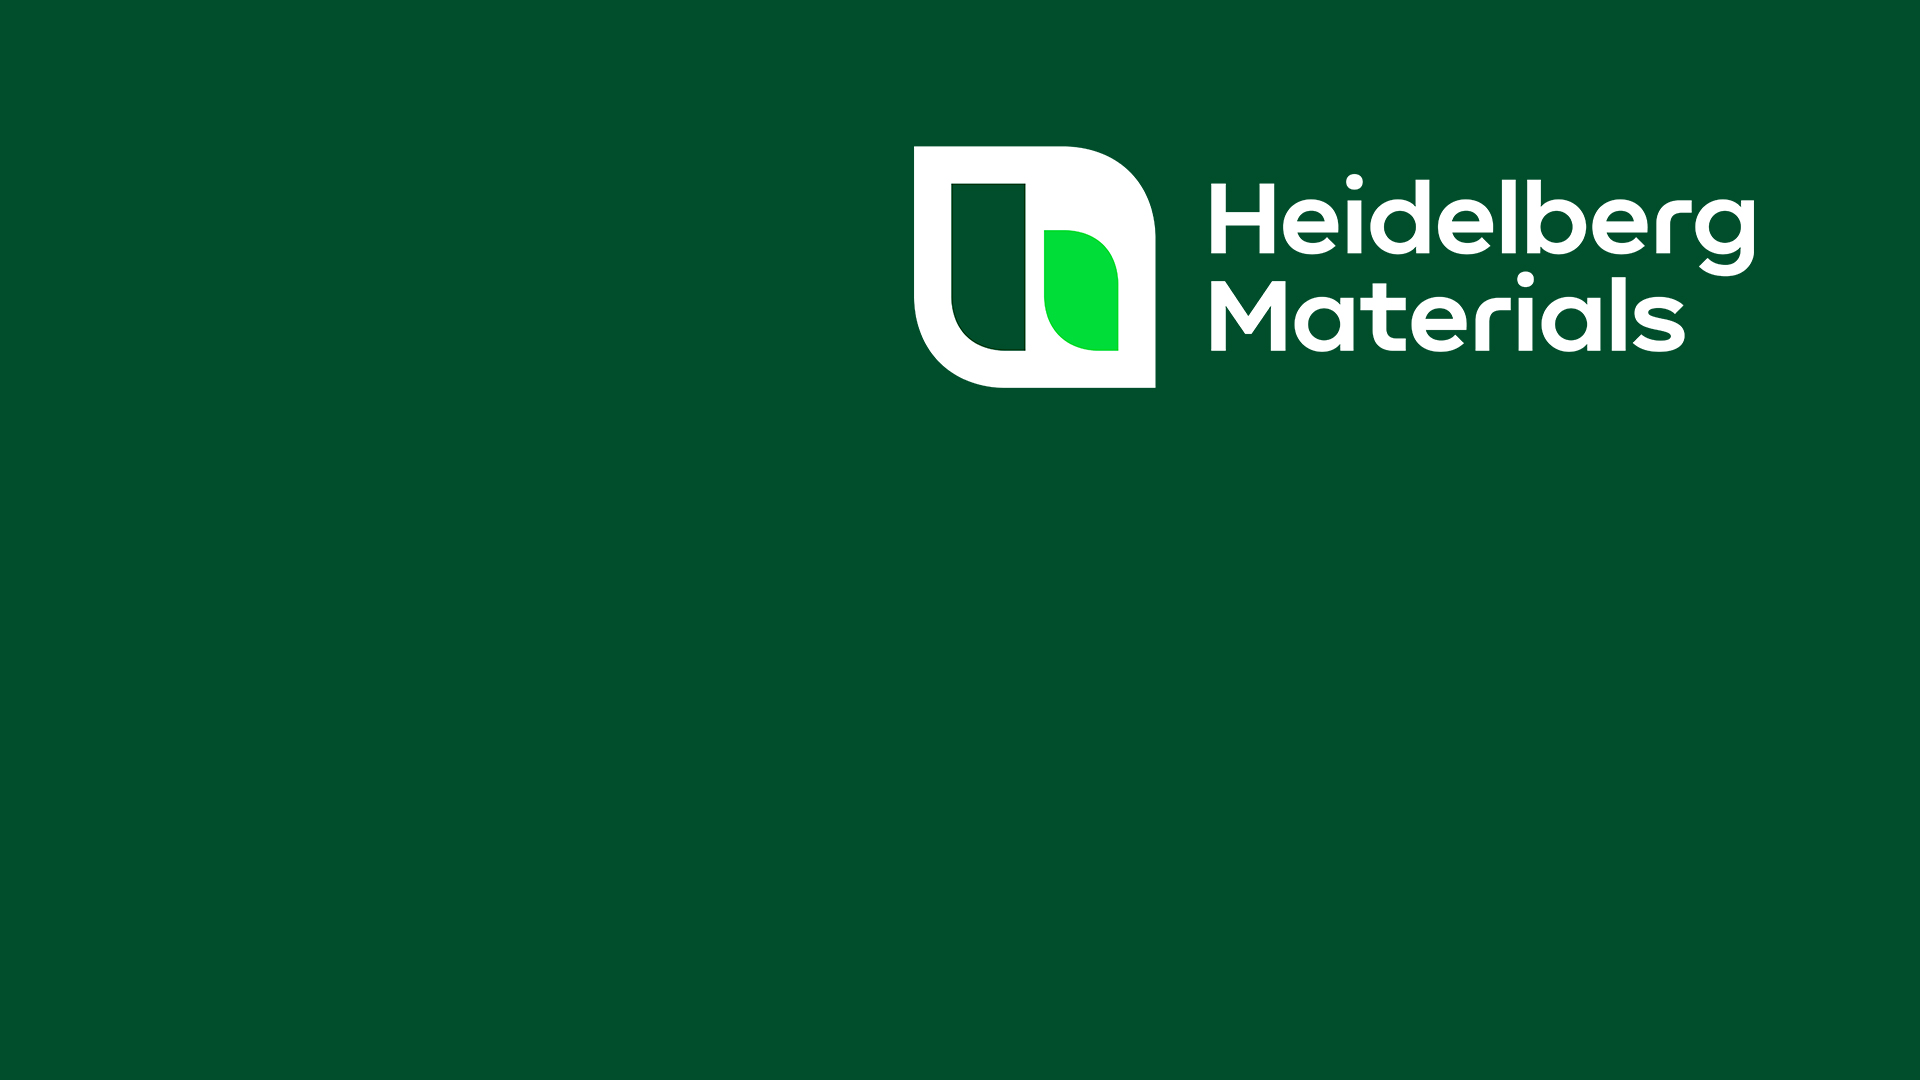 Heidelberg Materials UK products